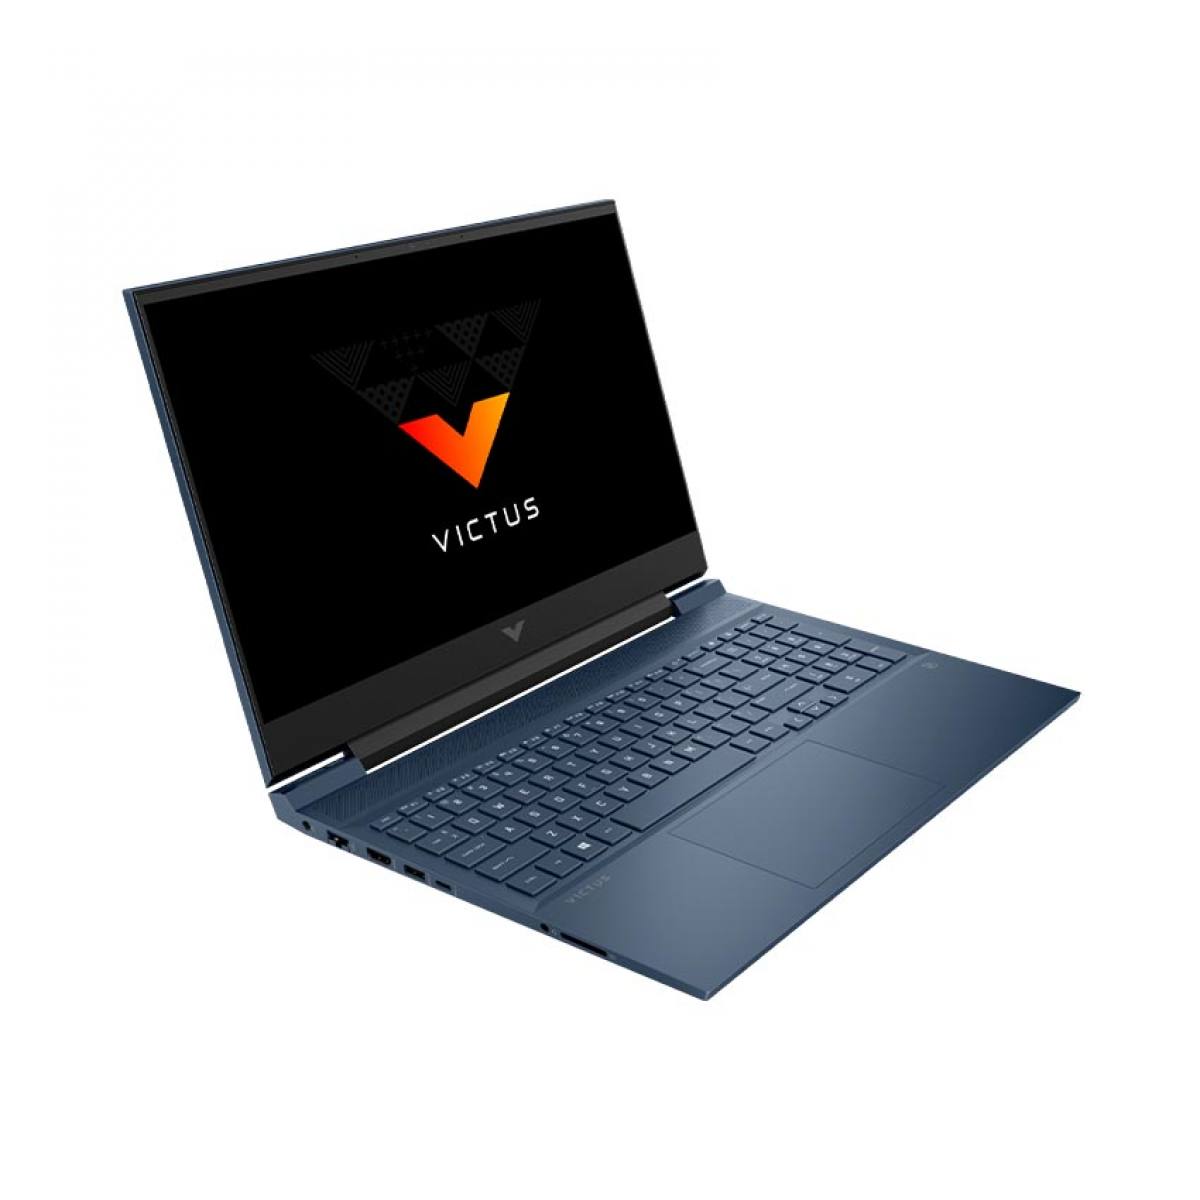 Laptop HP Gaming VICTUS 16-d0197TX (i7 11800H/16GB RAM/512GB SSD)